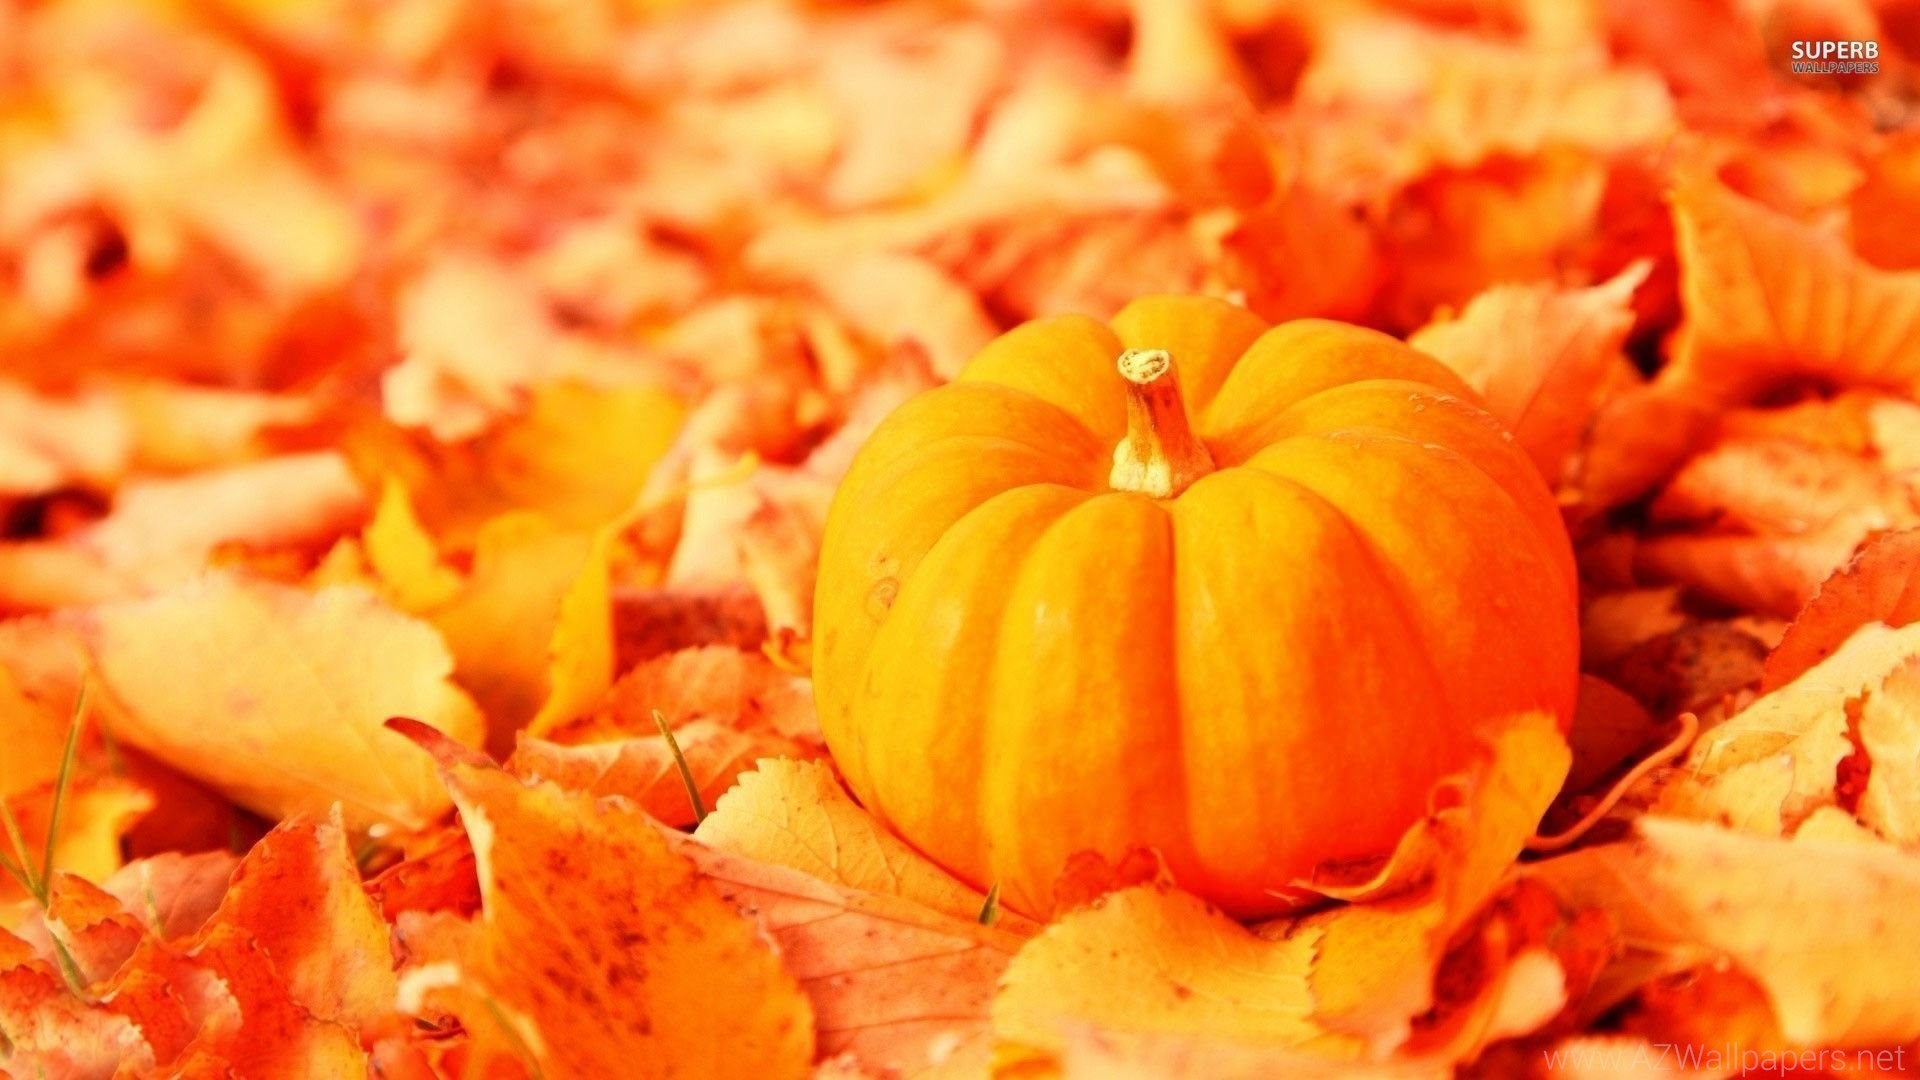 Colorful Pumpkins Autumn Wallpaper  iPhone Android  Desktop Backgrounds